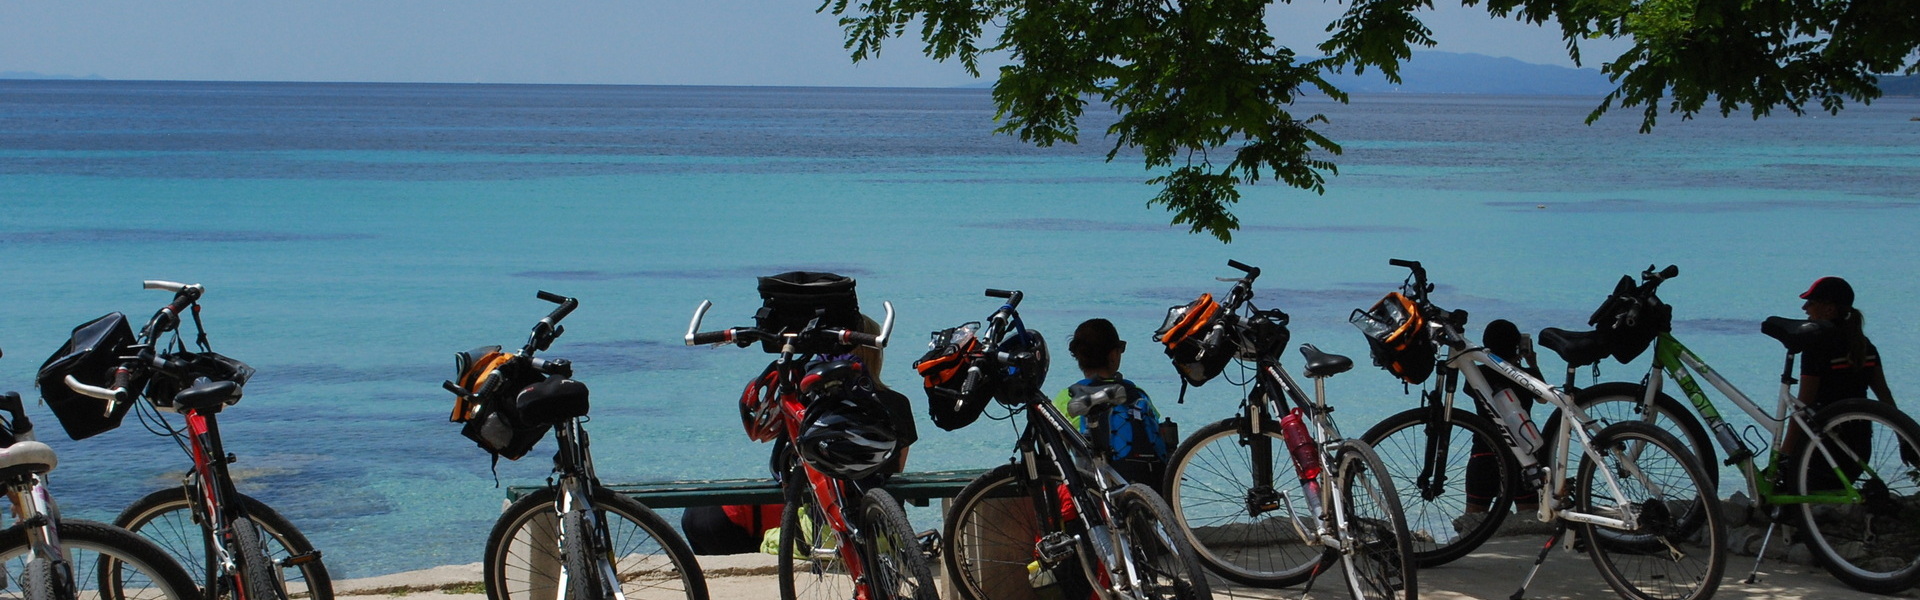 Cycling guided holiday from Split to Dubrovnik via islands of Hvar and Korčula and Pelješac peninsula